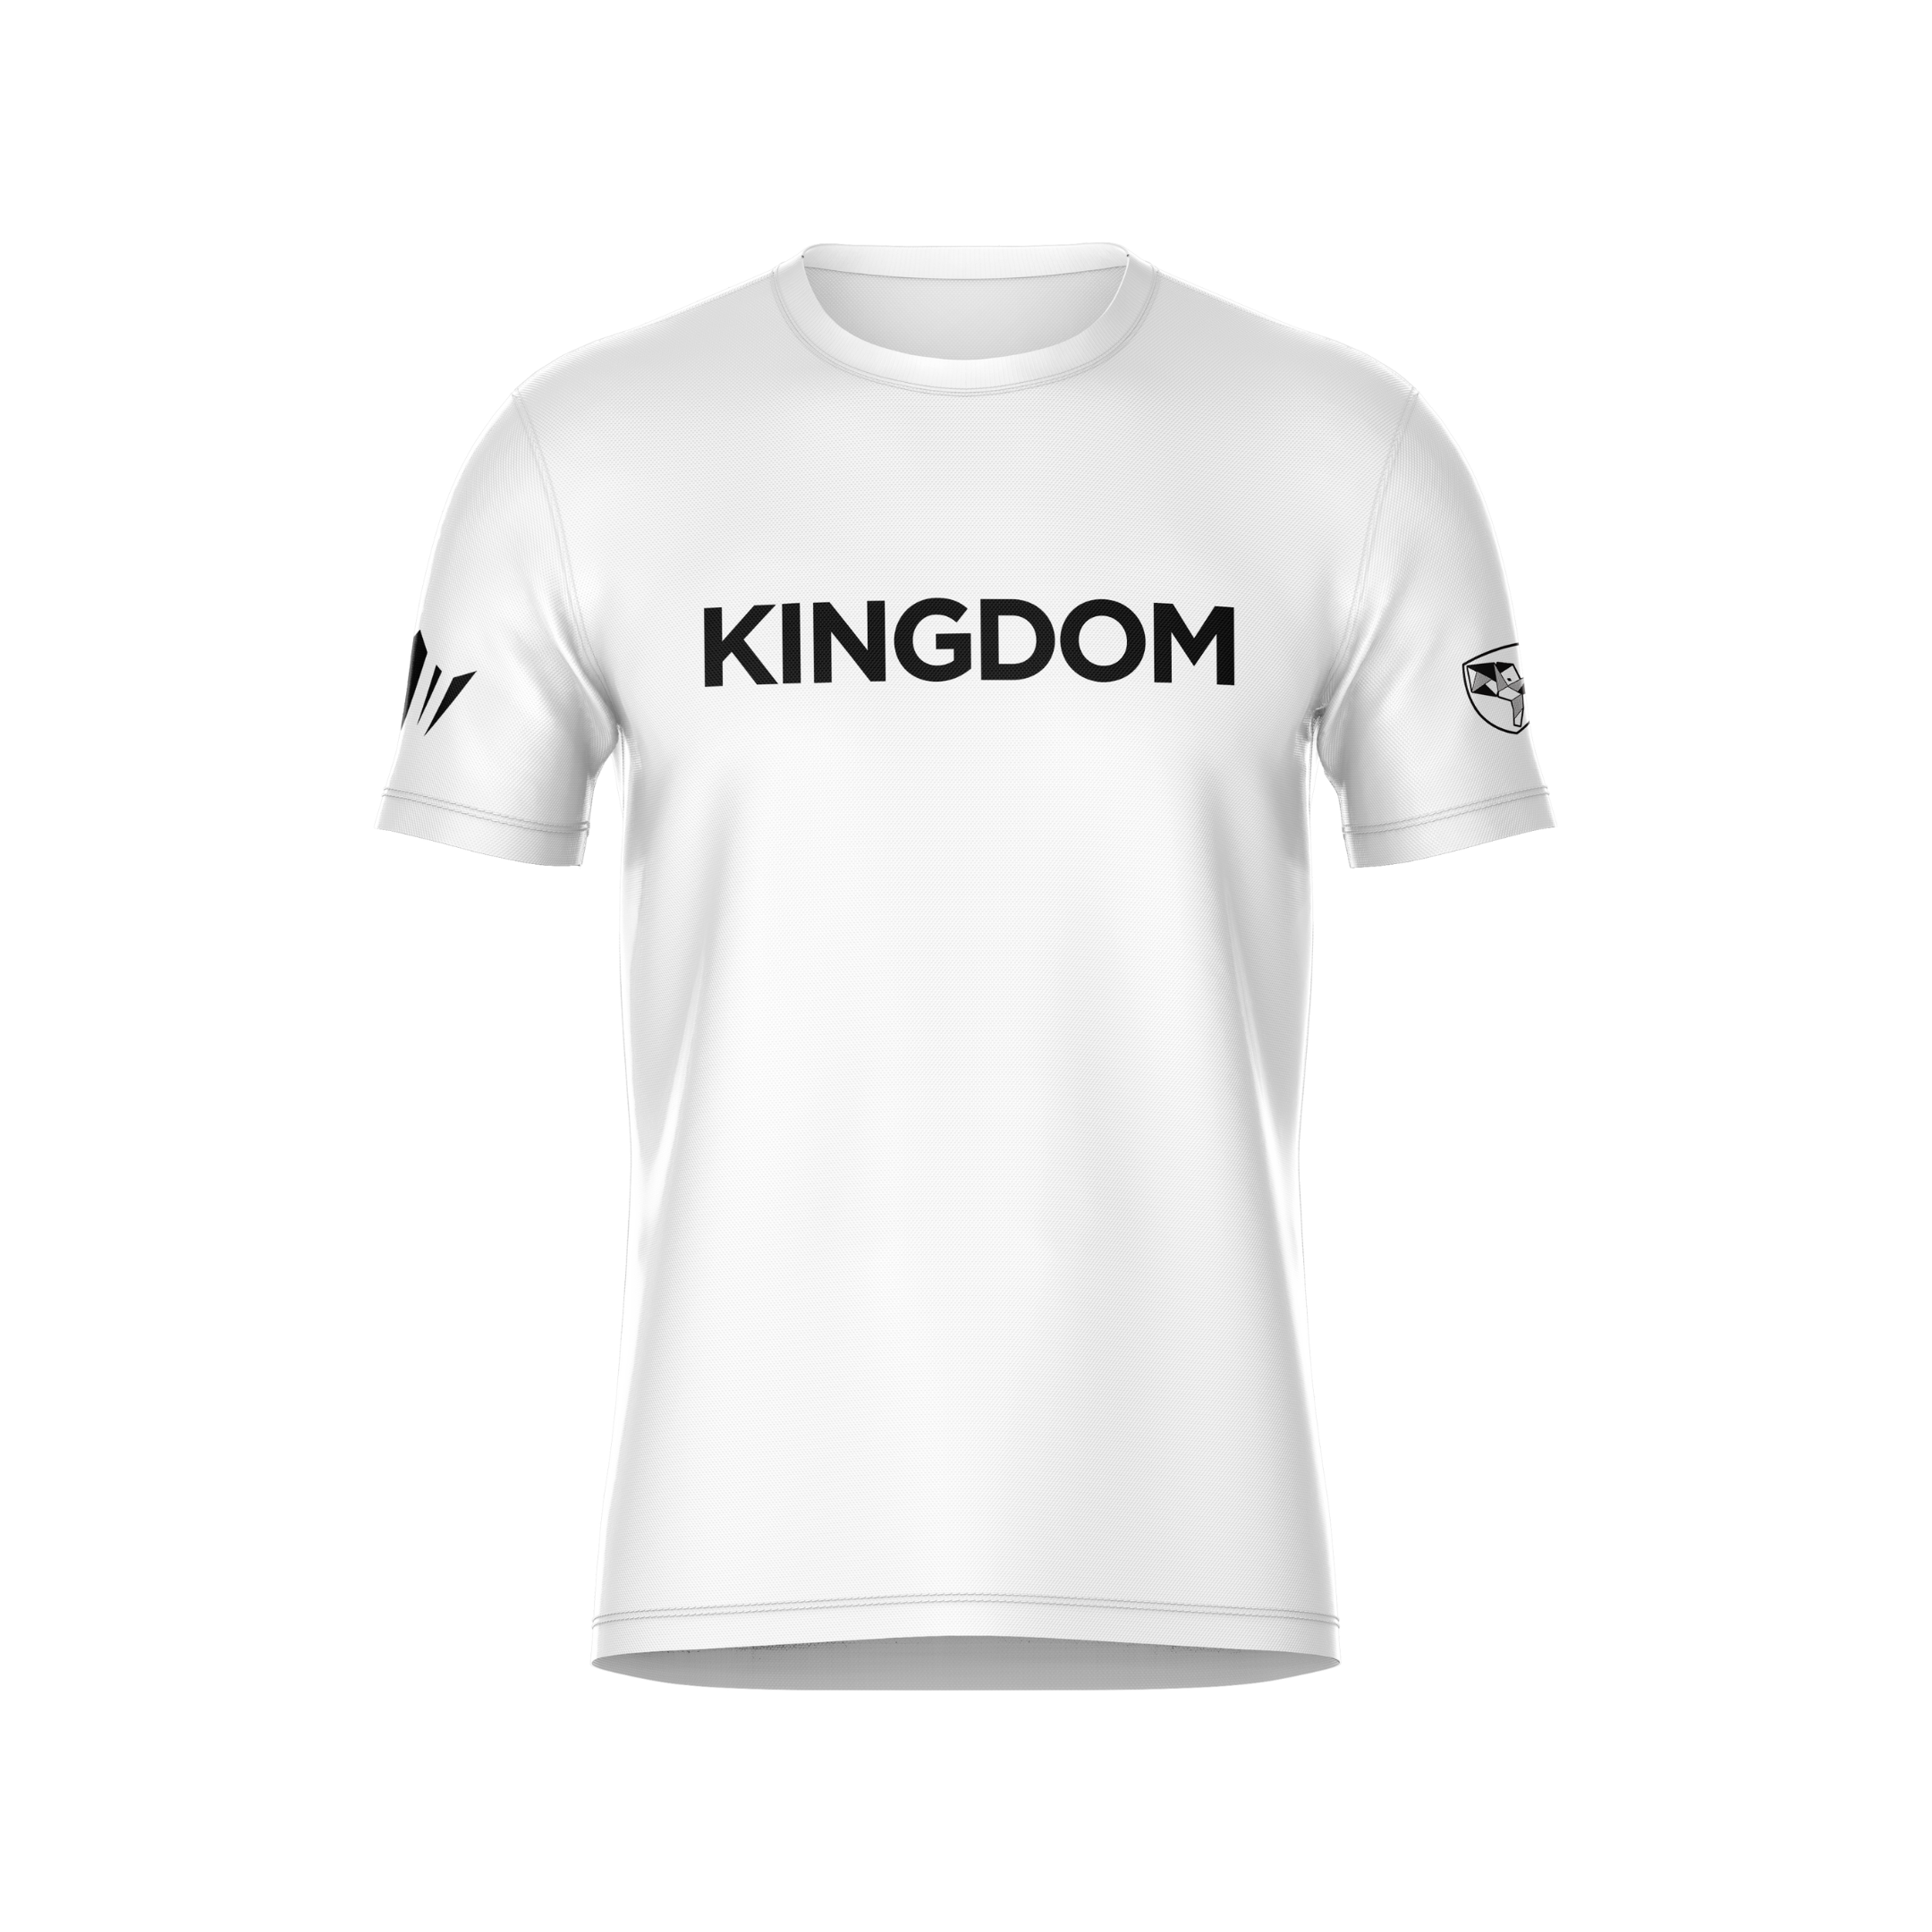 Kingdom Tee - White